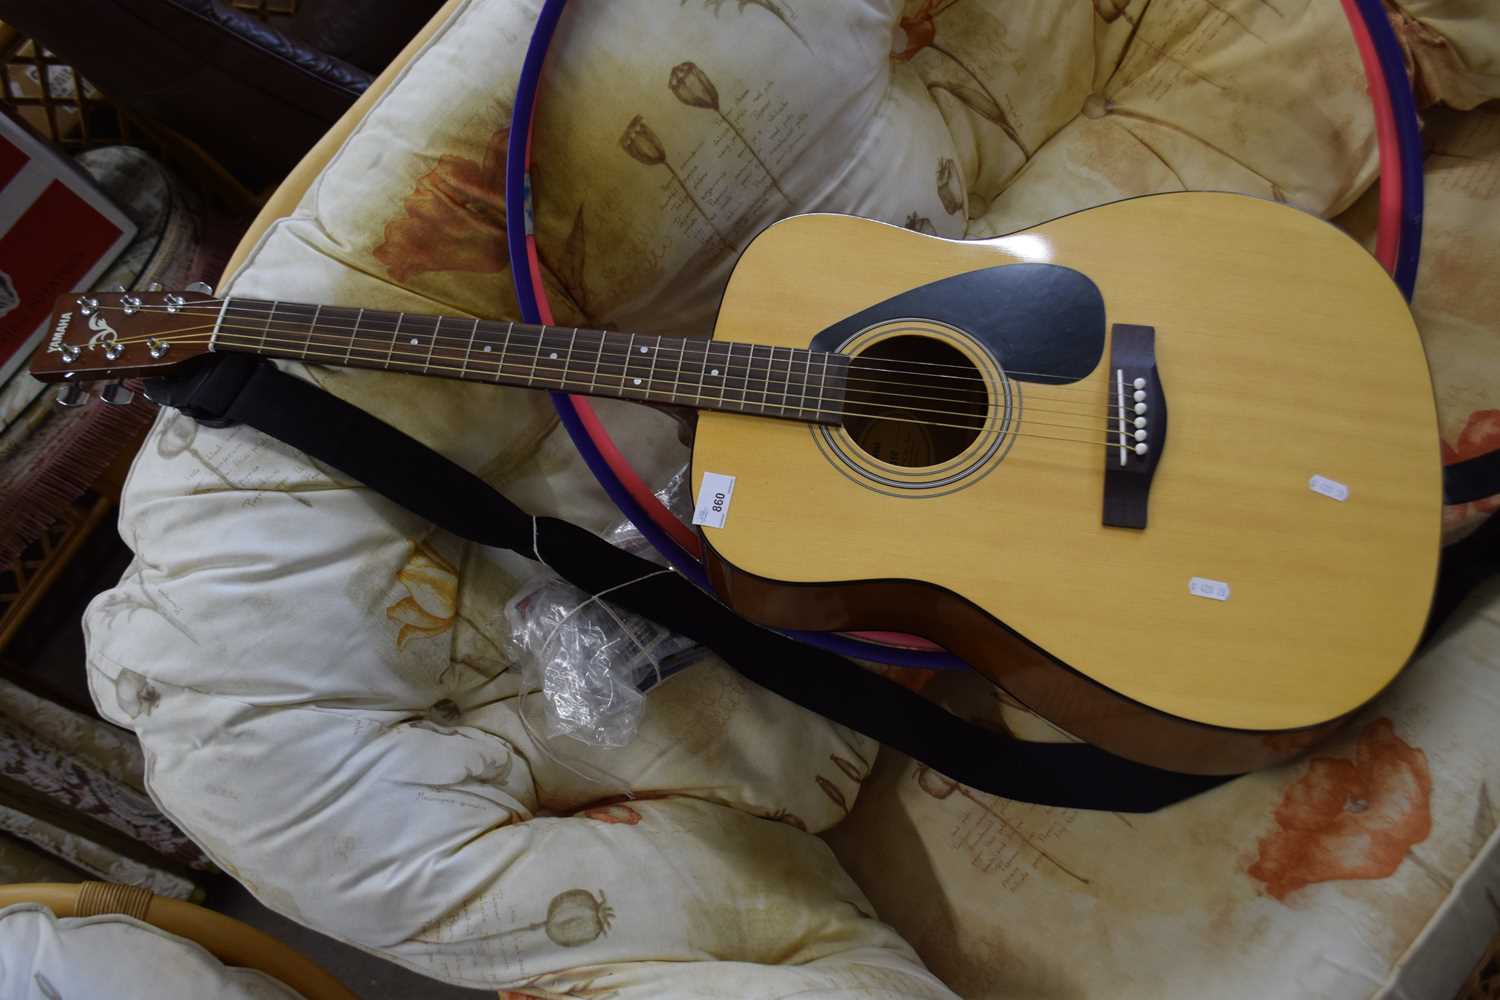 A Yamaha acoustic guitar